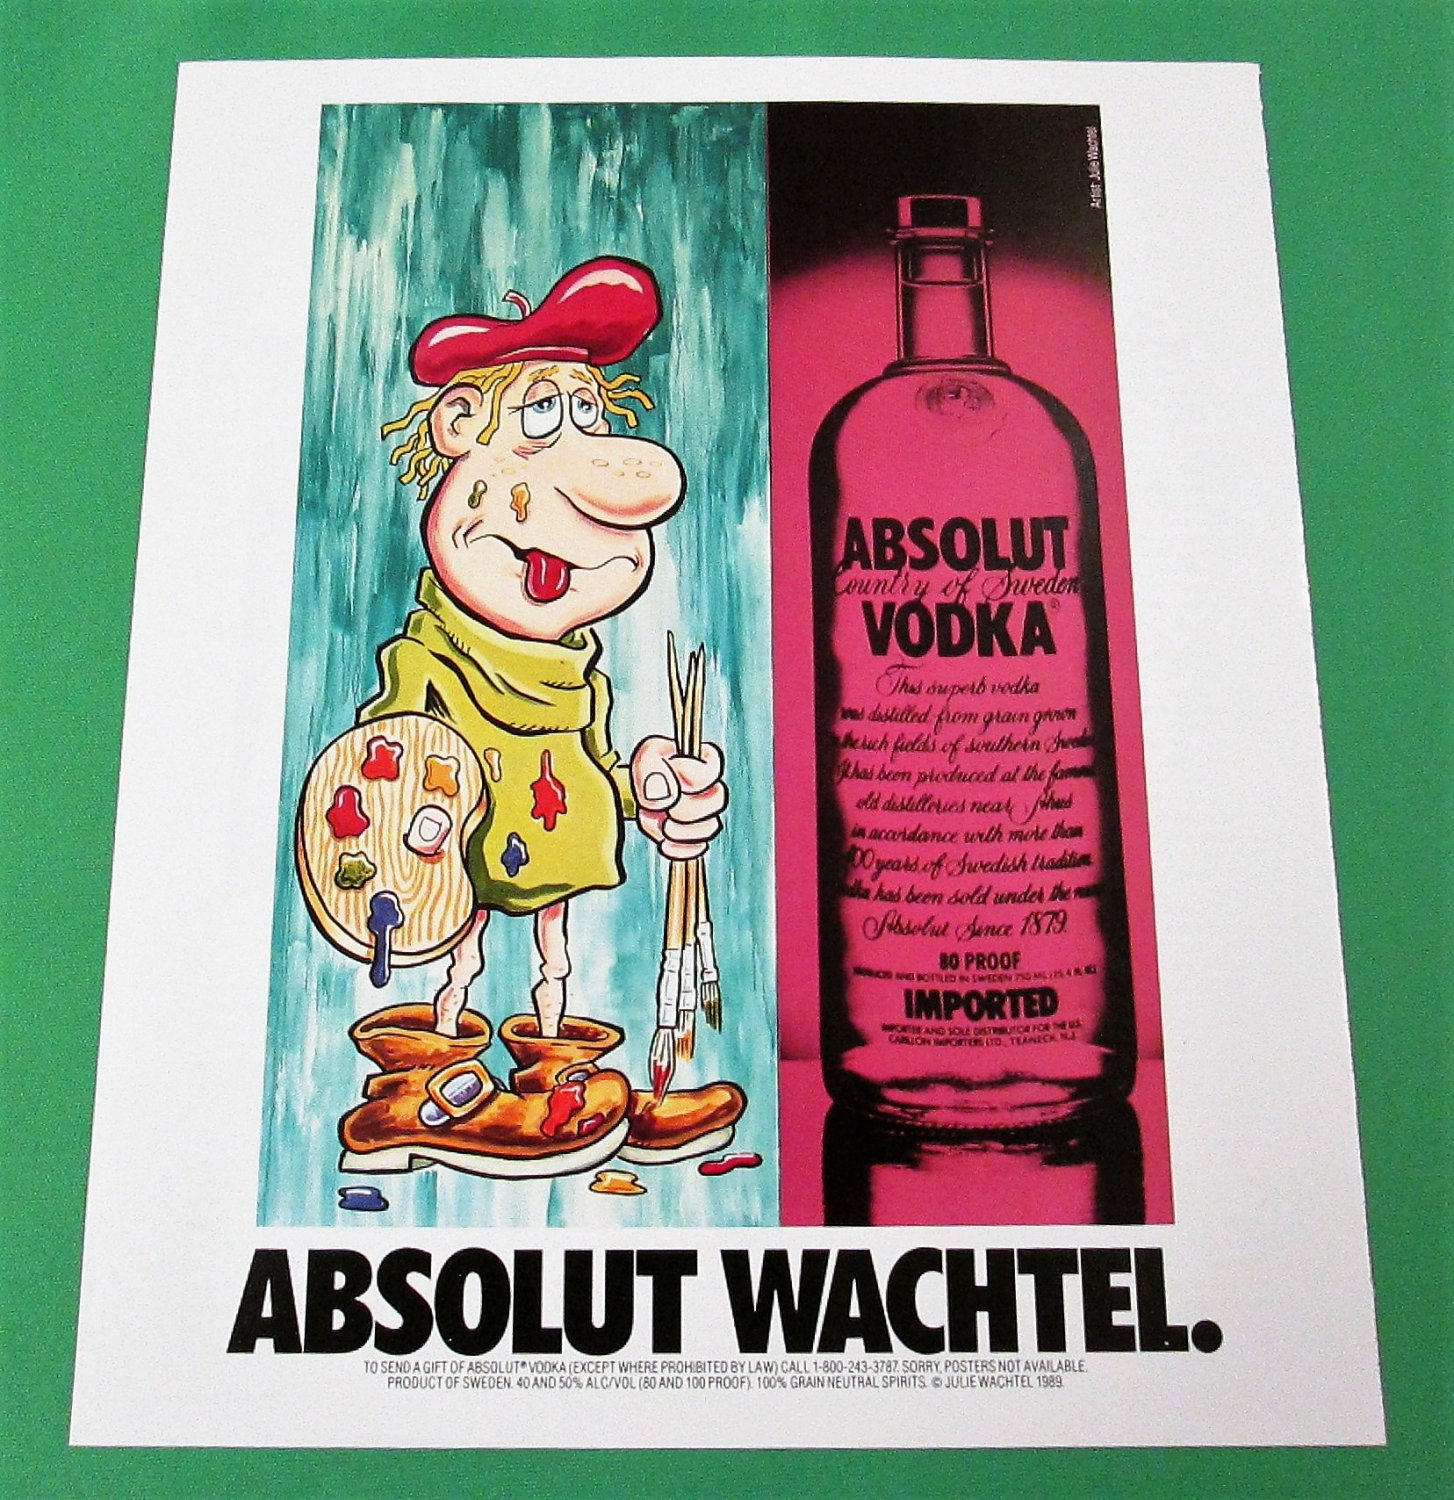 ABSOLUT WACHTEL Vodka Magazine Ad w/ Artwork by Julie Wachtel 1989 - NOT COMMON!